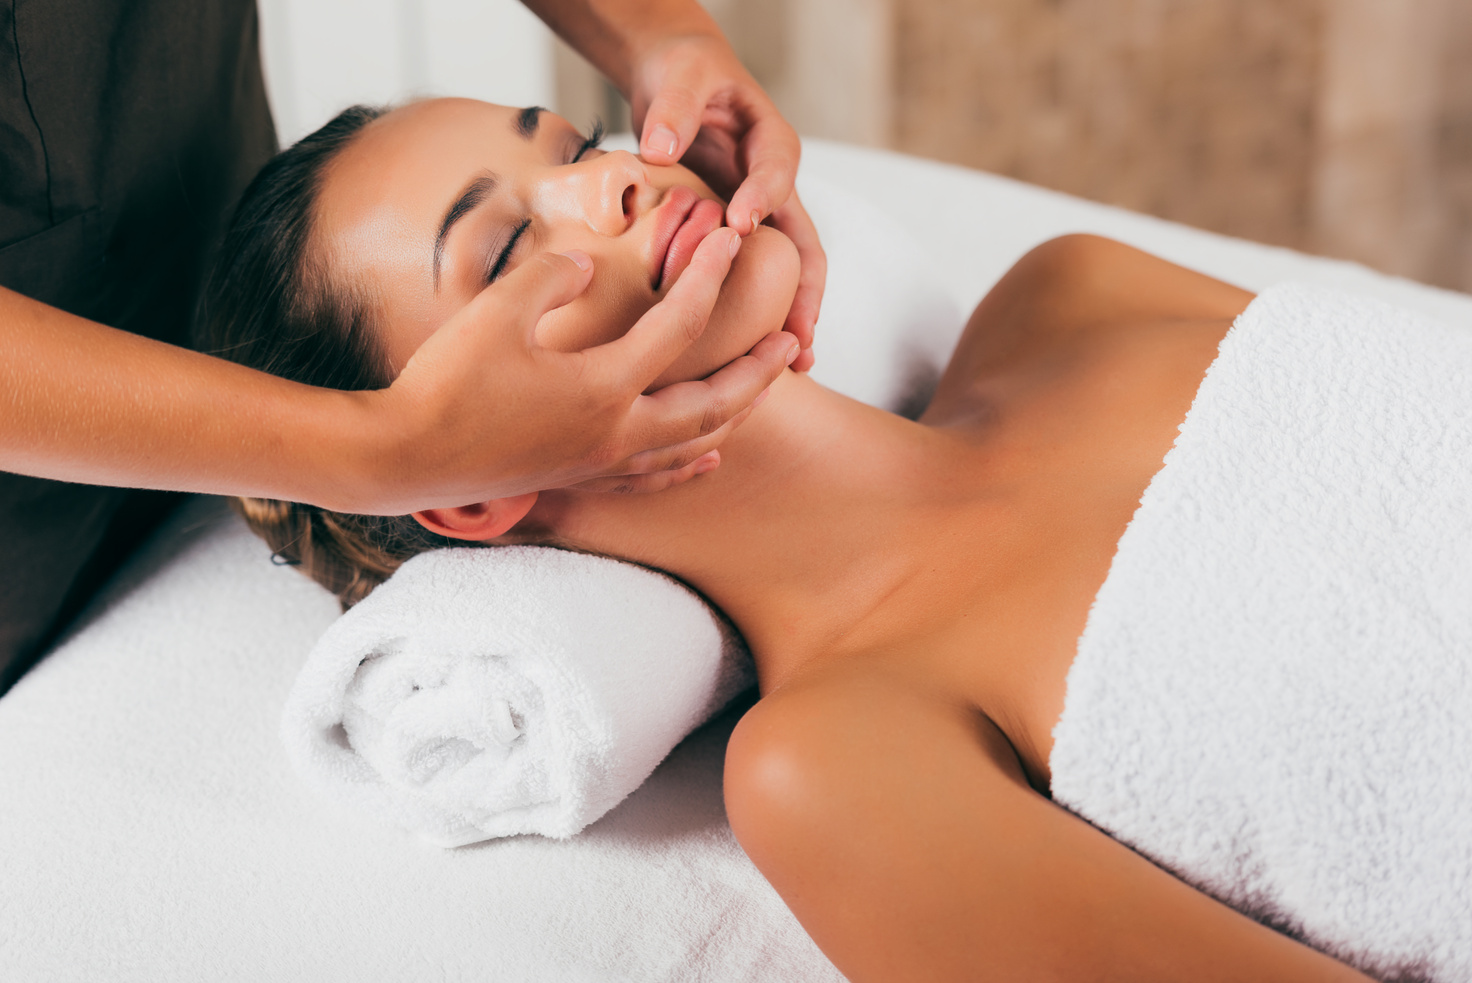 beautiful woman having face massage in spa salon